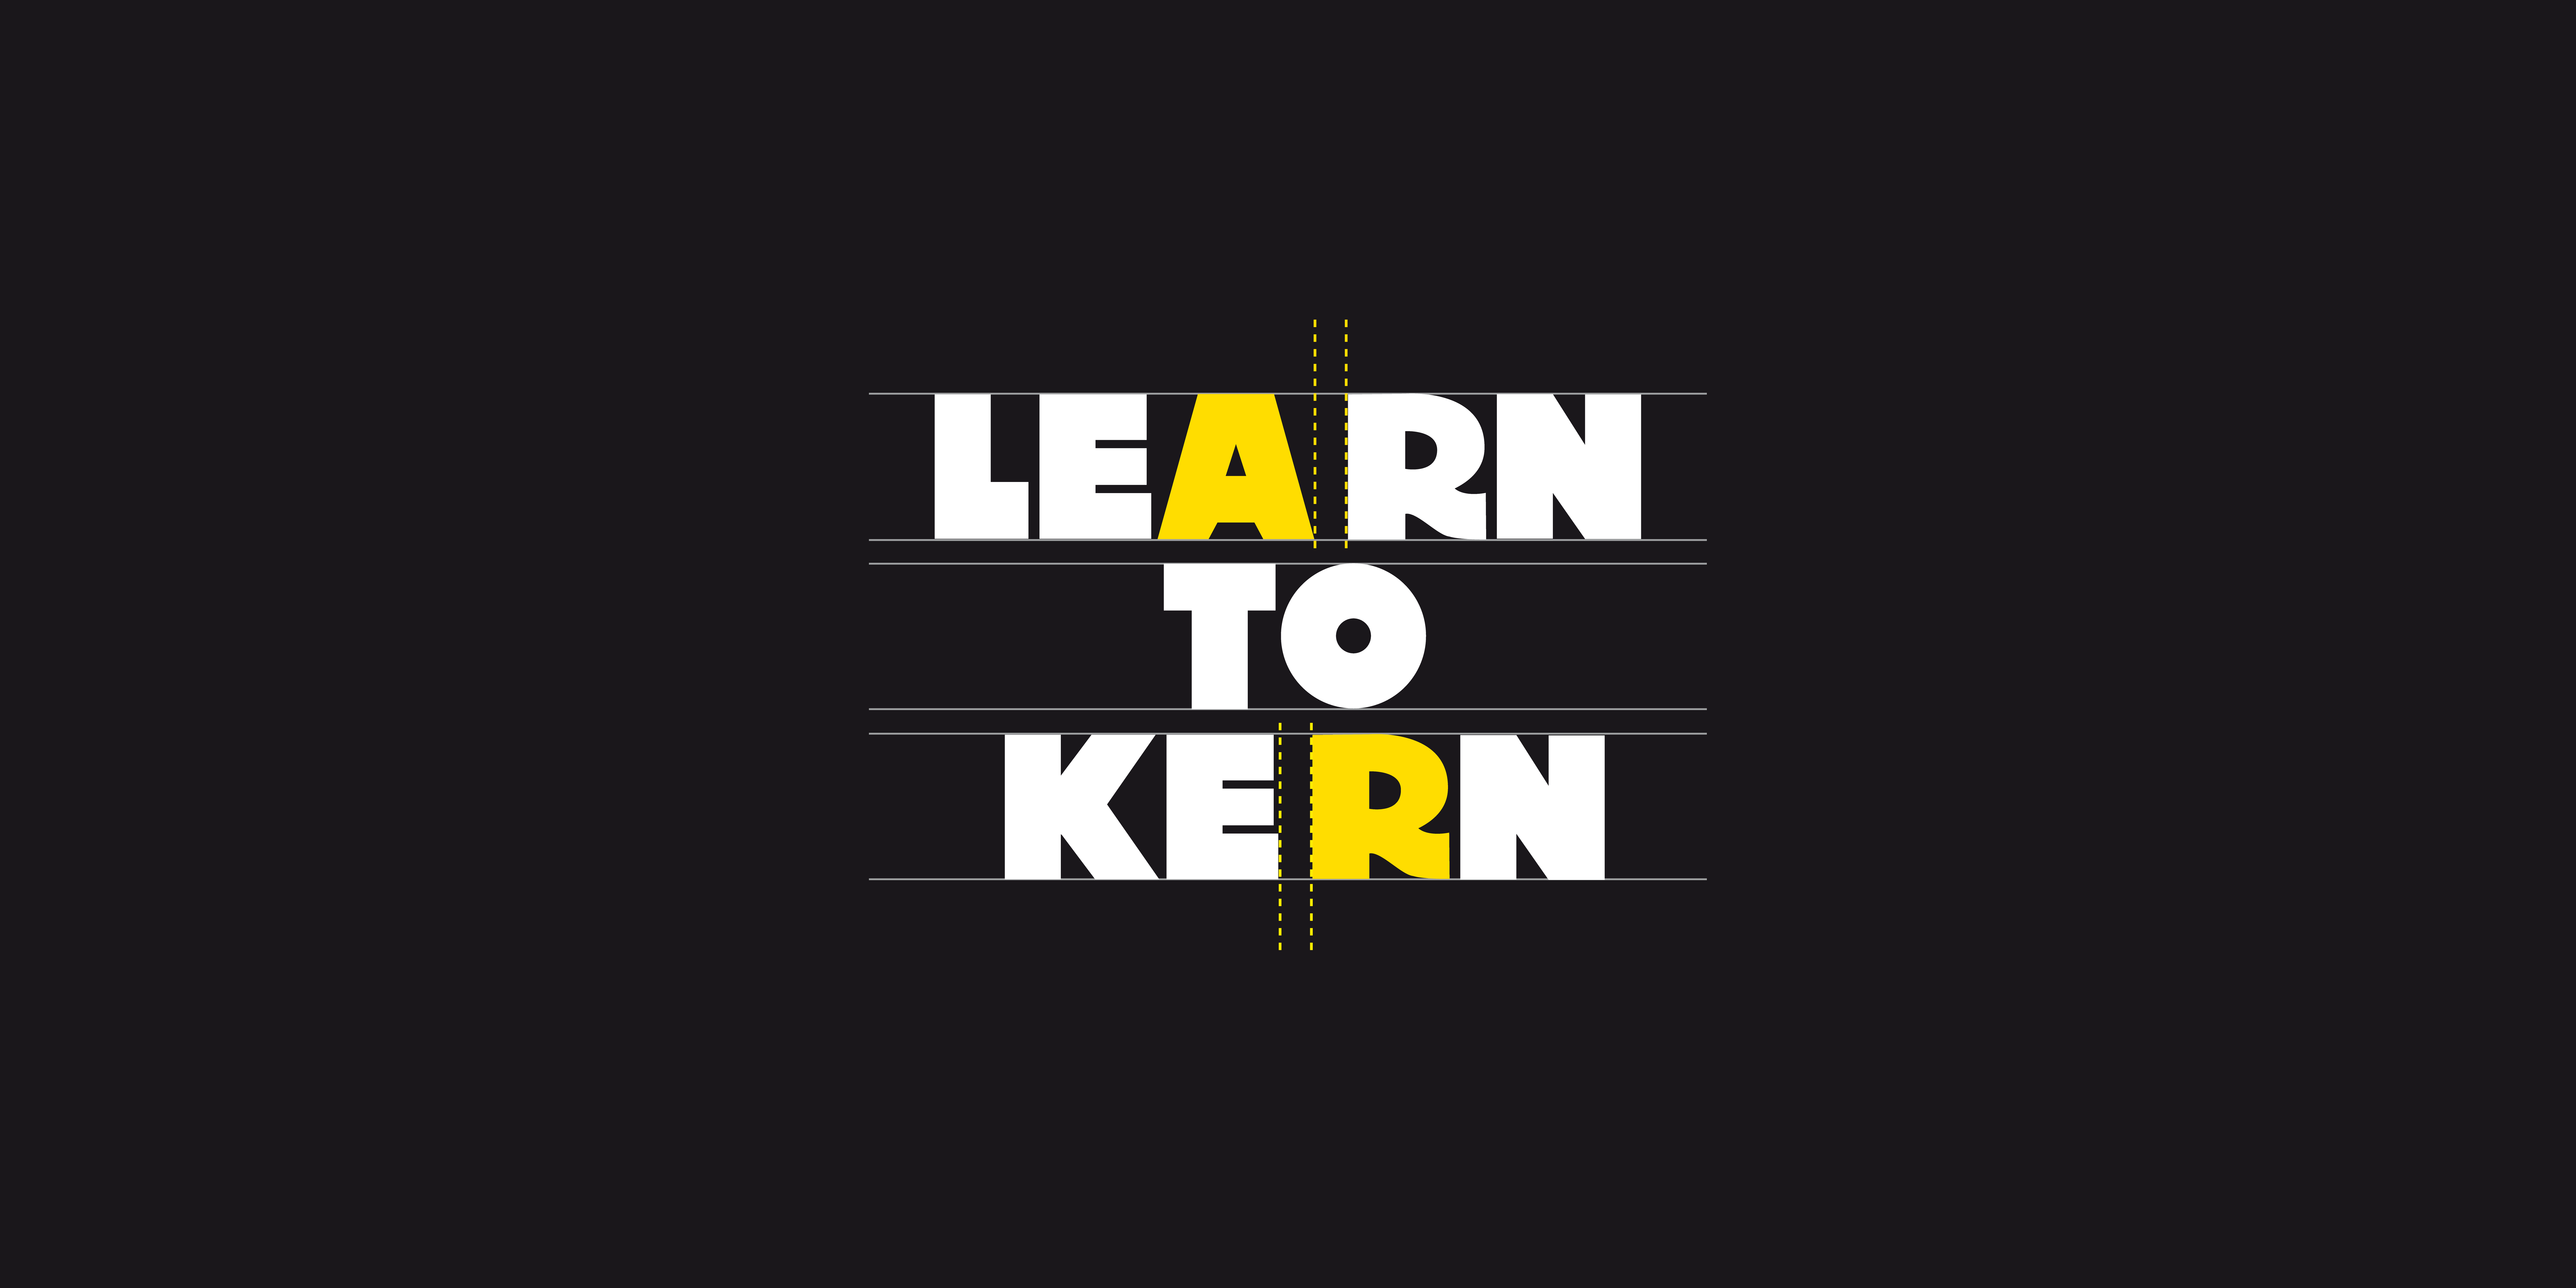 Learn to kern